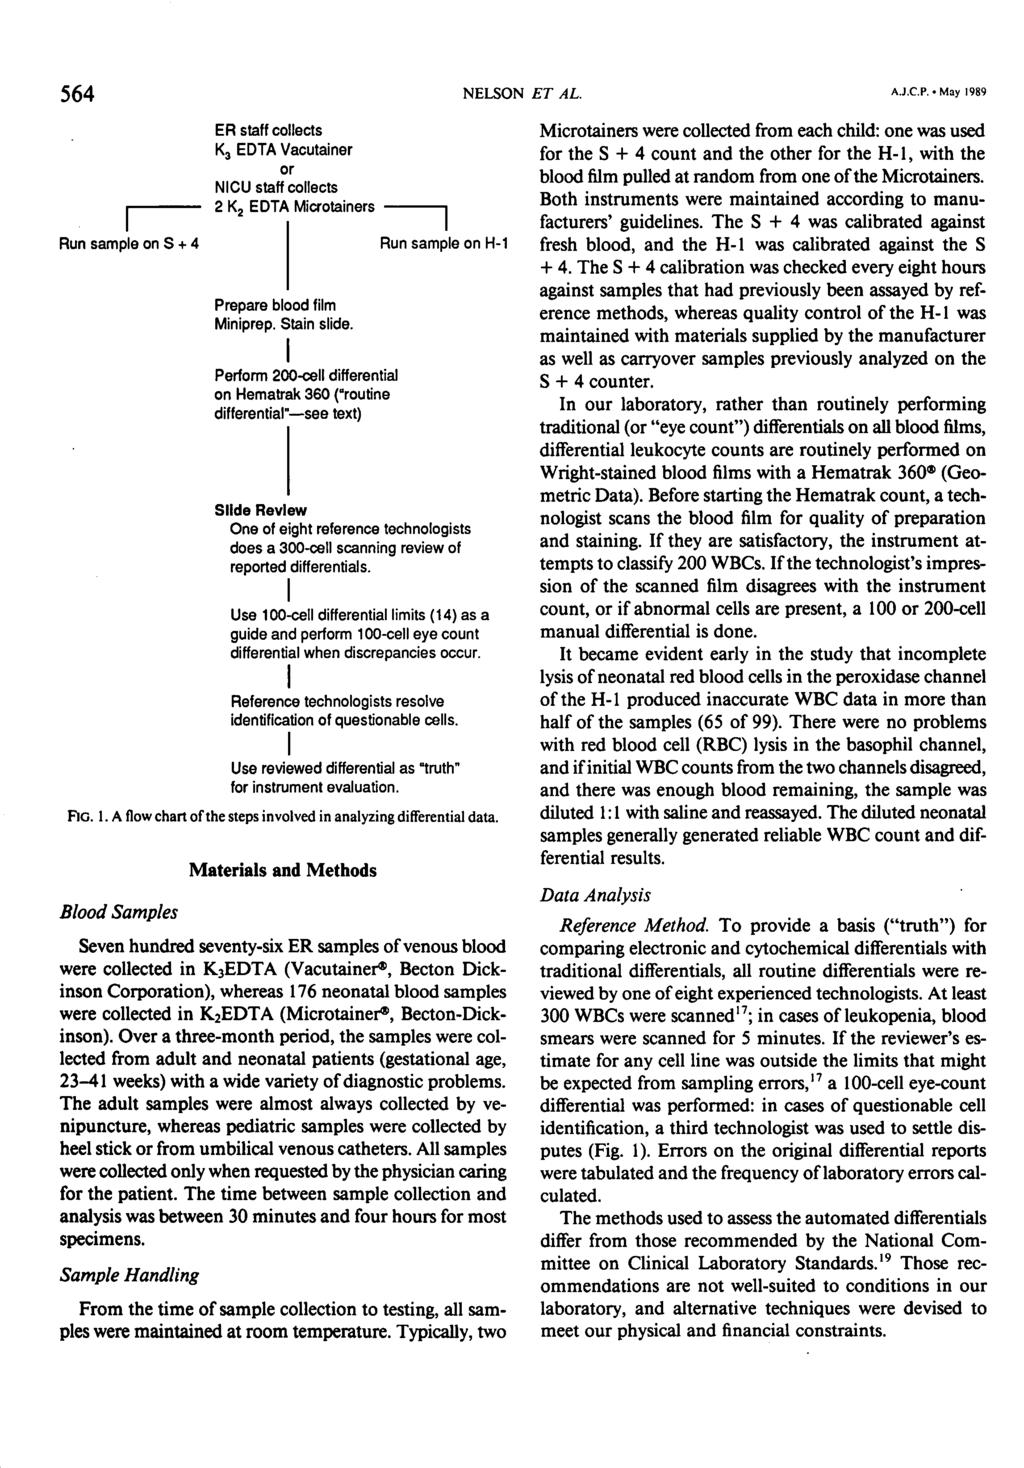 56 NELSON ET AL. A.J.C.P. «May 1989 ER staff collects K EDTA Vacutainer or NCU staff collects 2 K 2 EDTA Microtainers Run sample on S + Run sample on H-1 Prepare blood film Mlnlprep. Stain slide.